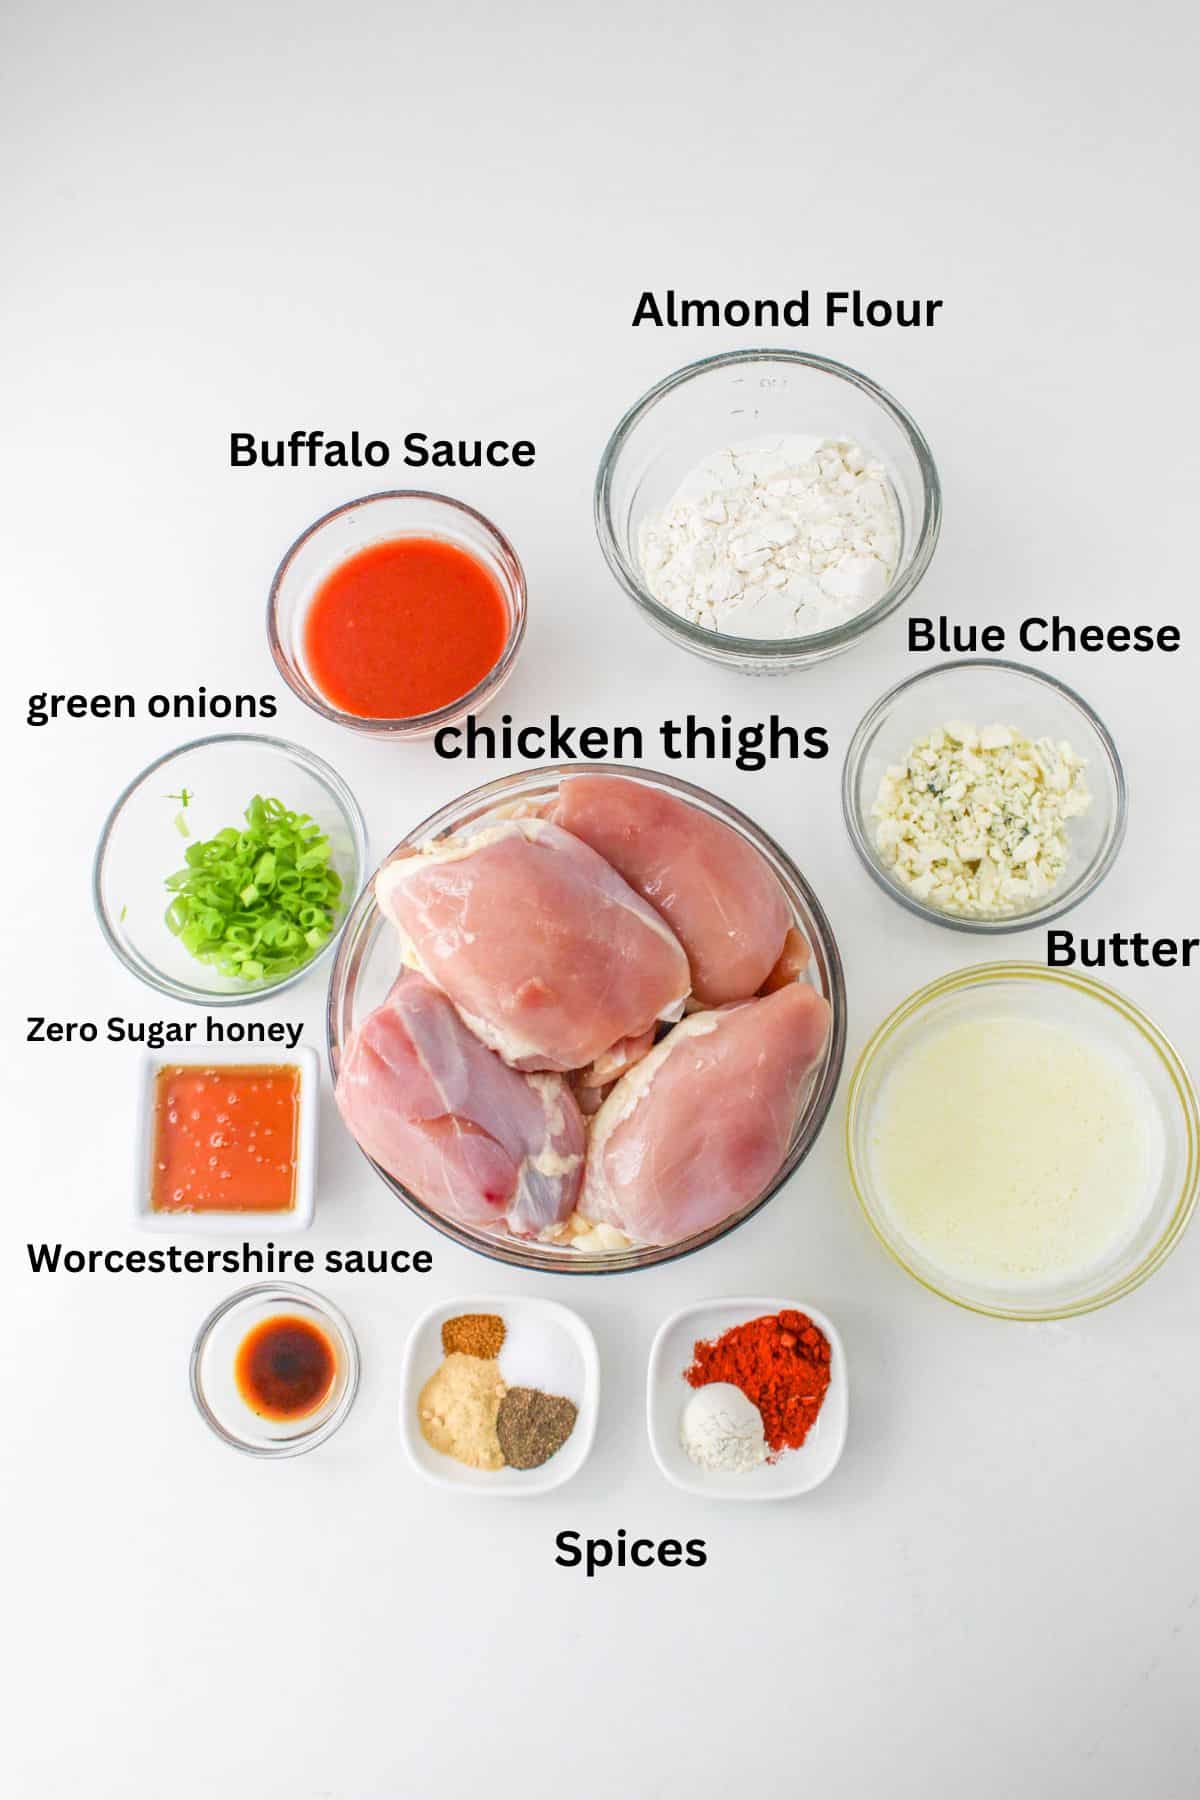 Buffalo Sauce, chicken thighs, Almond Flour, Blue Cheese, green onions, Zero Sugar honey, Butter, Worcestershire sauce,Spices